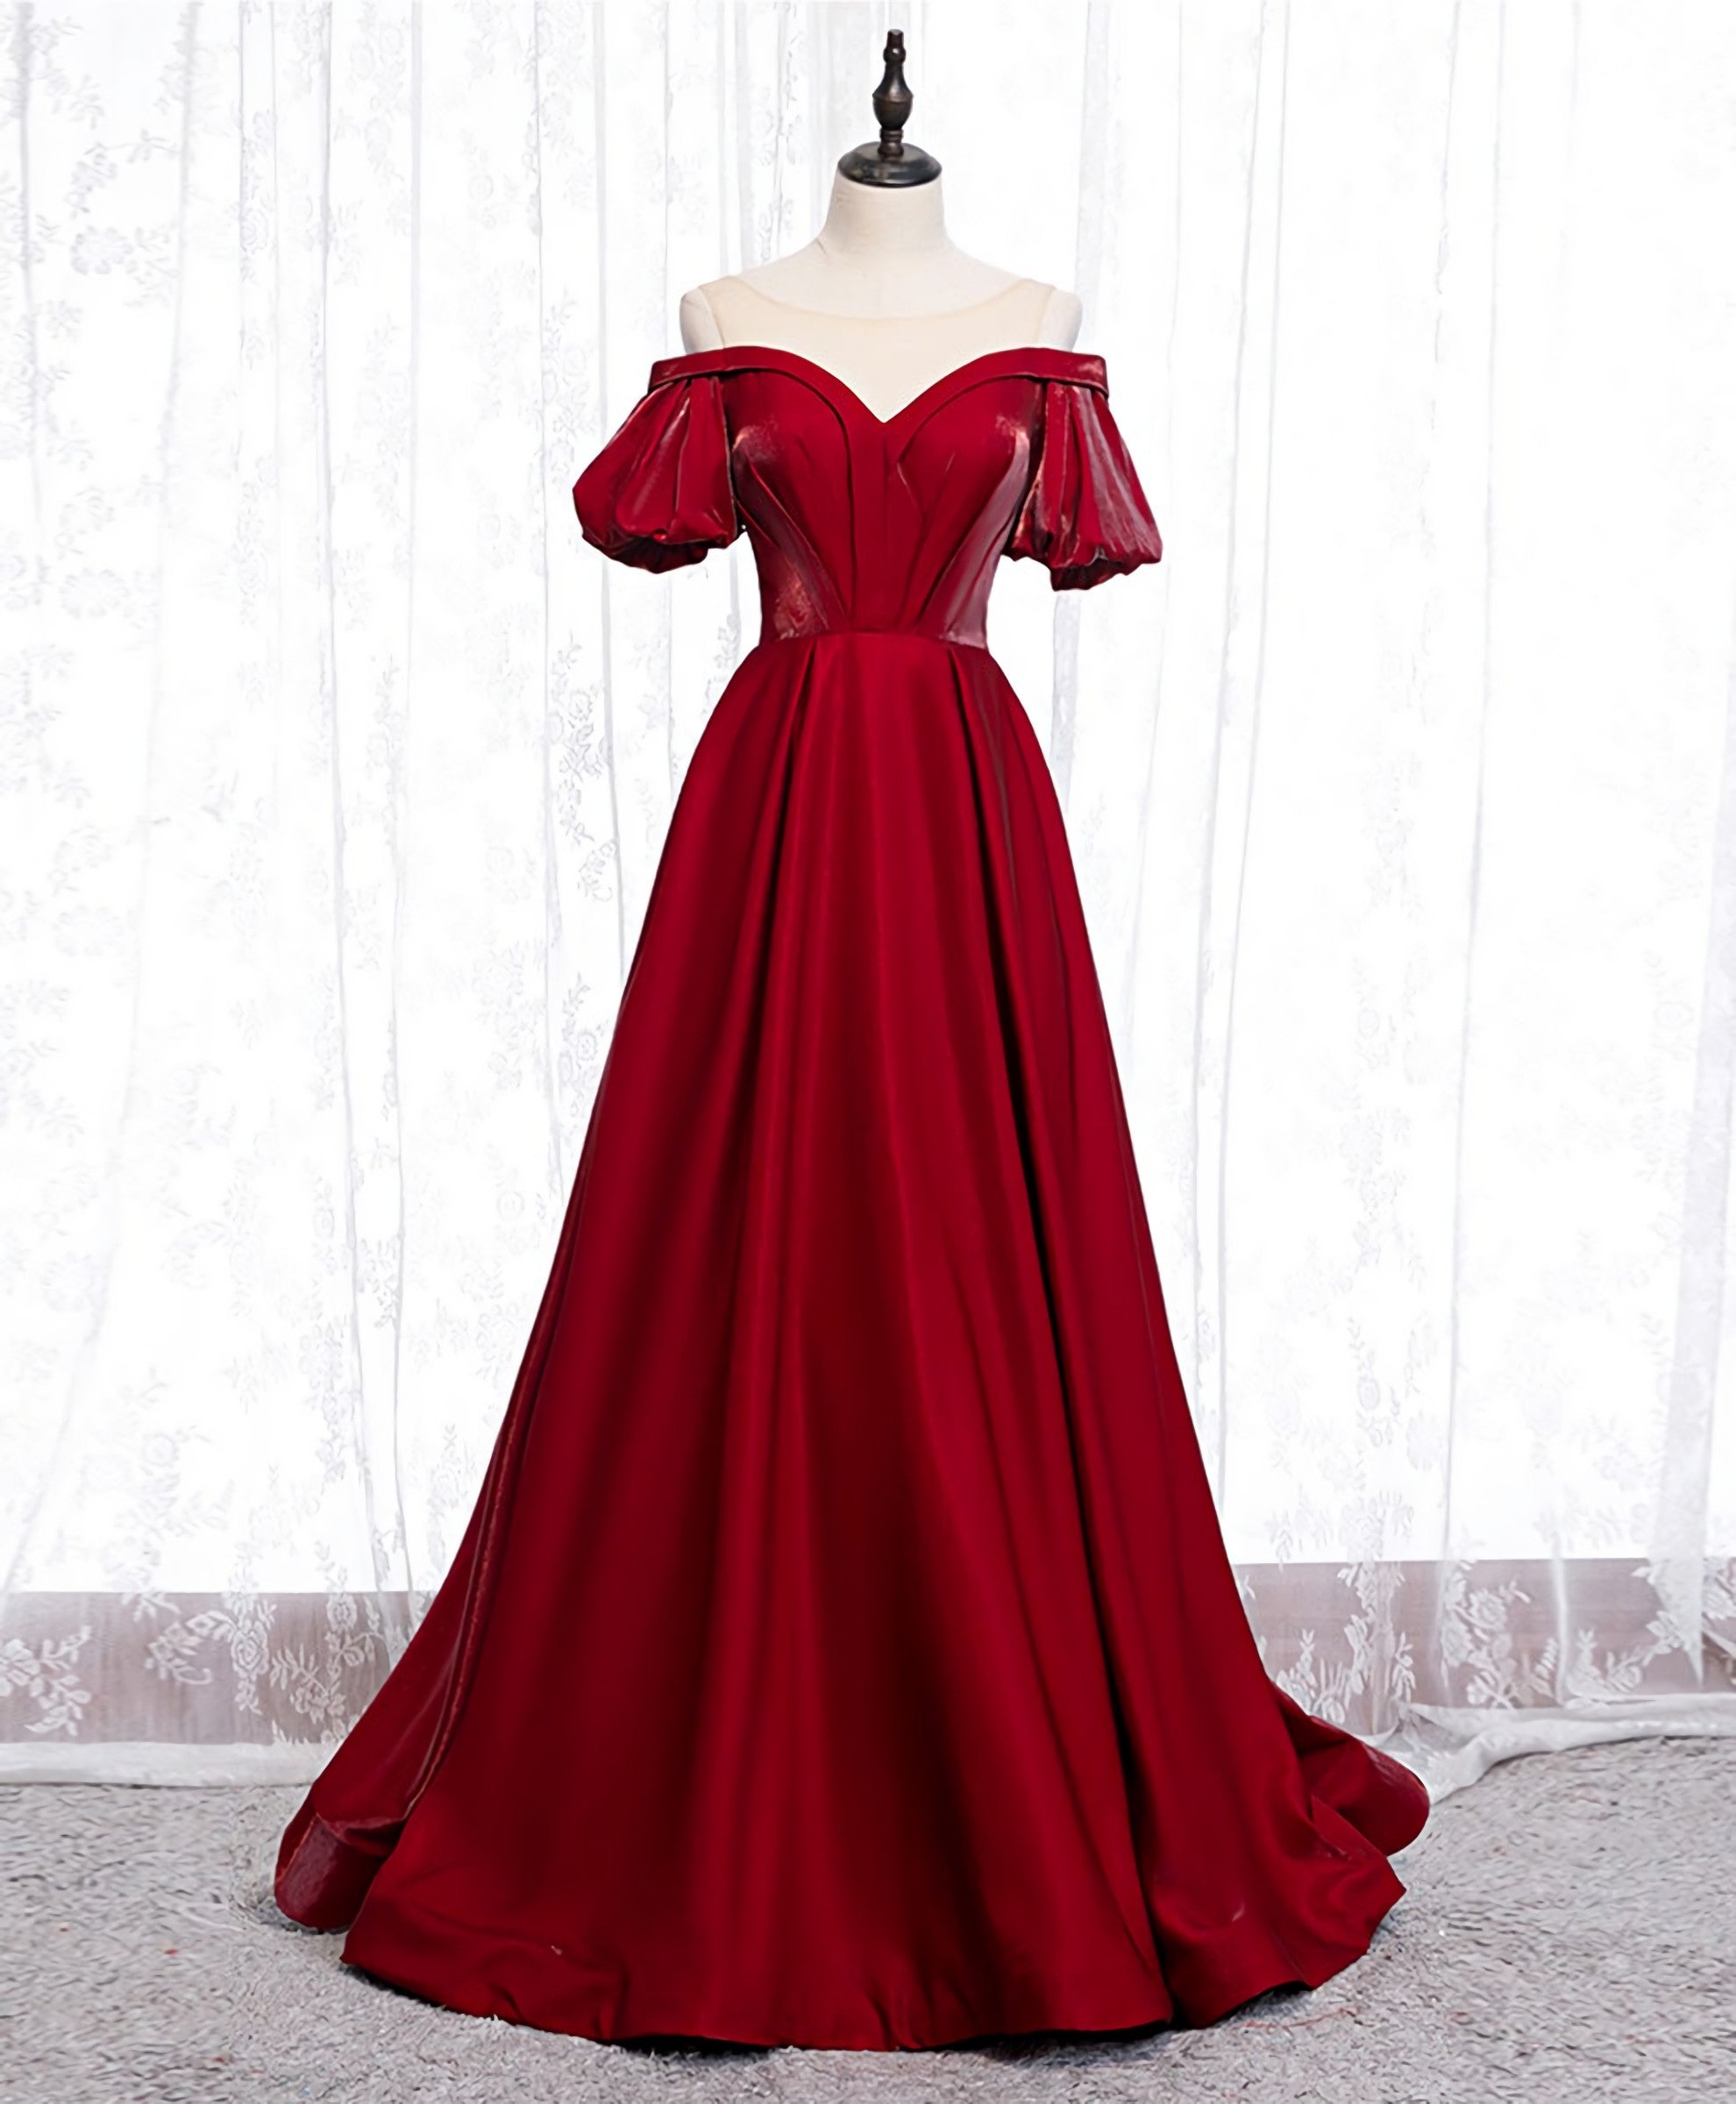 Simple Sweetheart Burgundy Satin Long Corset Prom Dress, Burgundy Evening Dress outfit, Prom Dresses Under 118